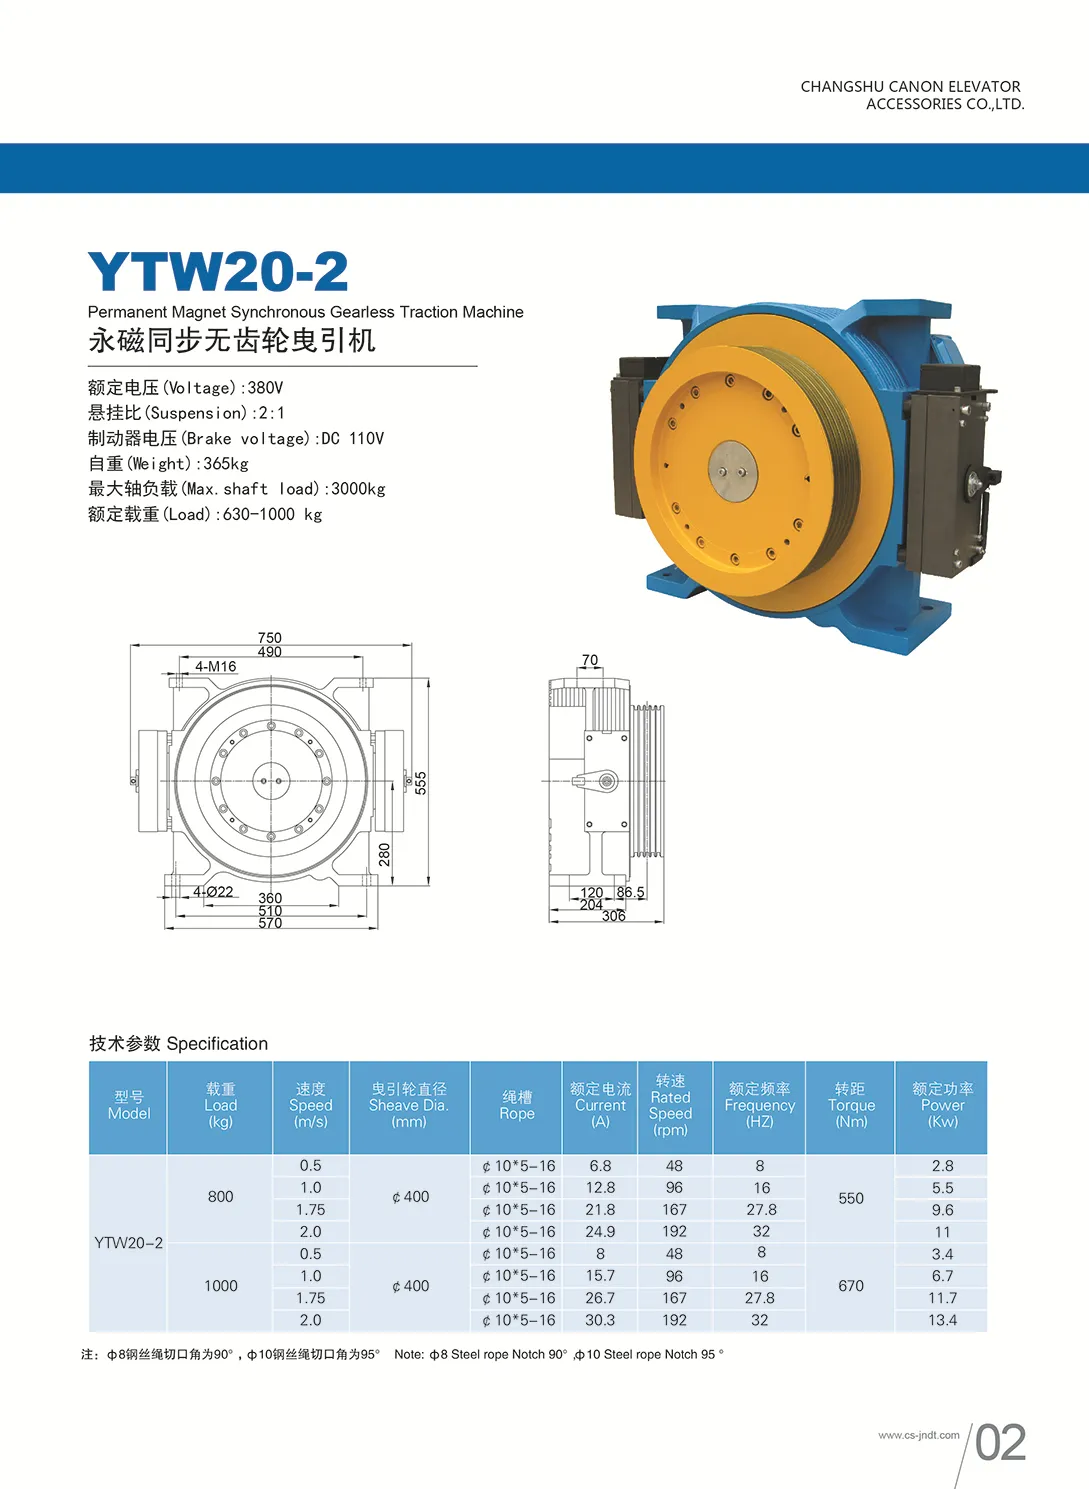 Lift Hoofddeel Lift Permanente Magneet Synchrone GearLess Motor Tractie Machine Model YTW20-2